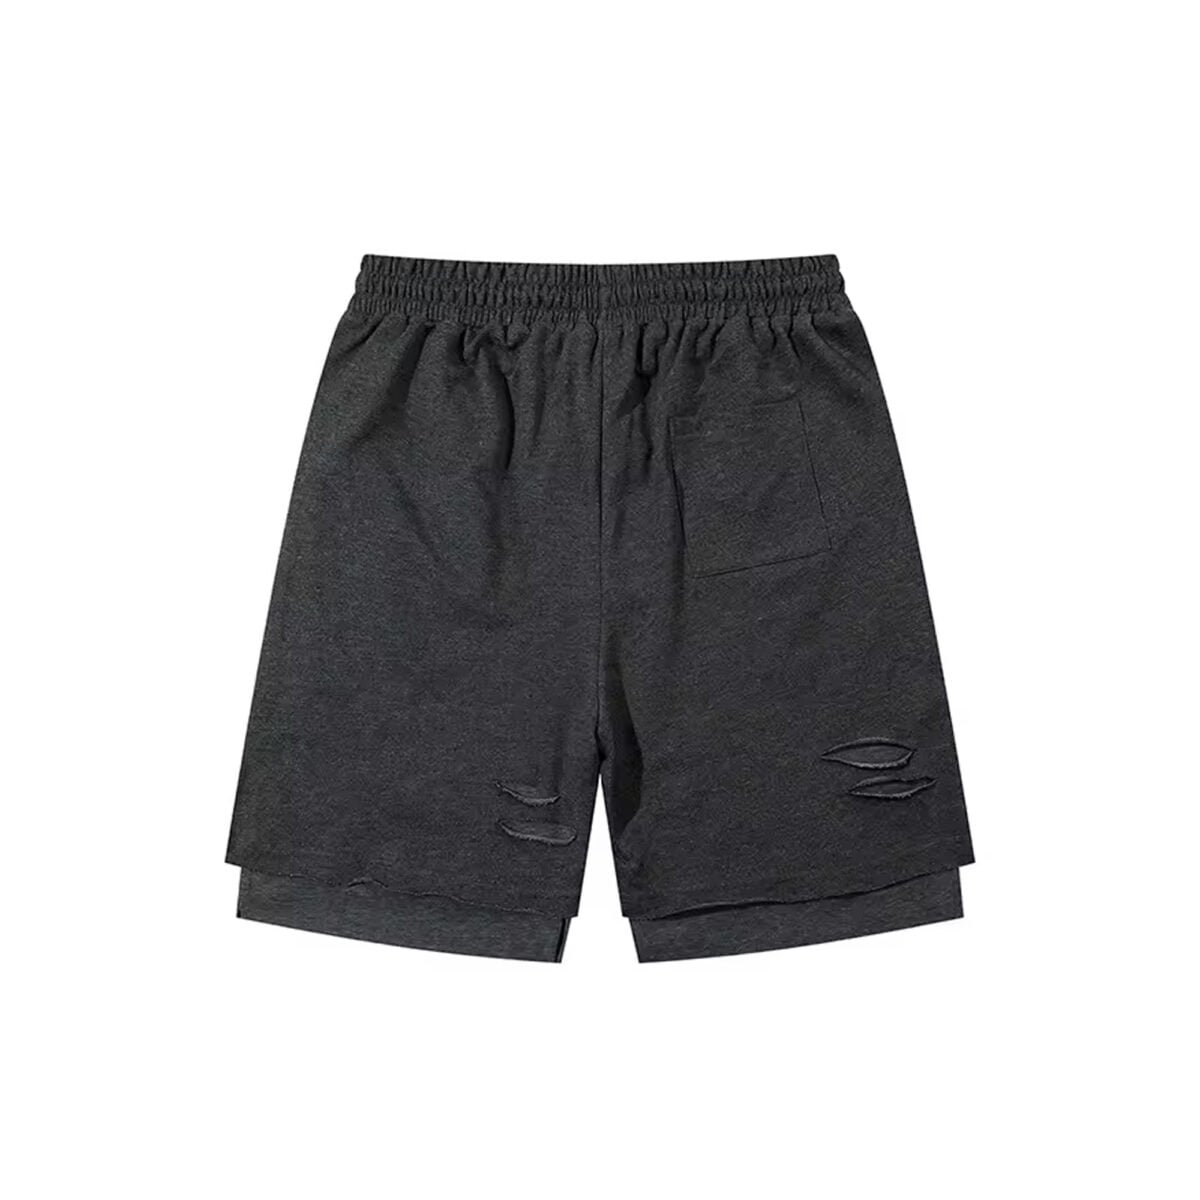 Double layer fashionable shorts